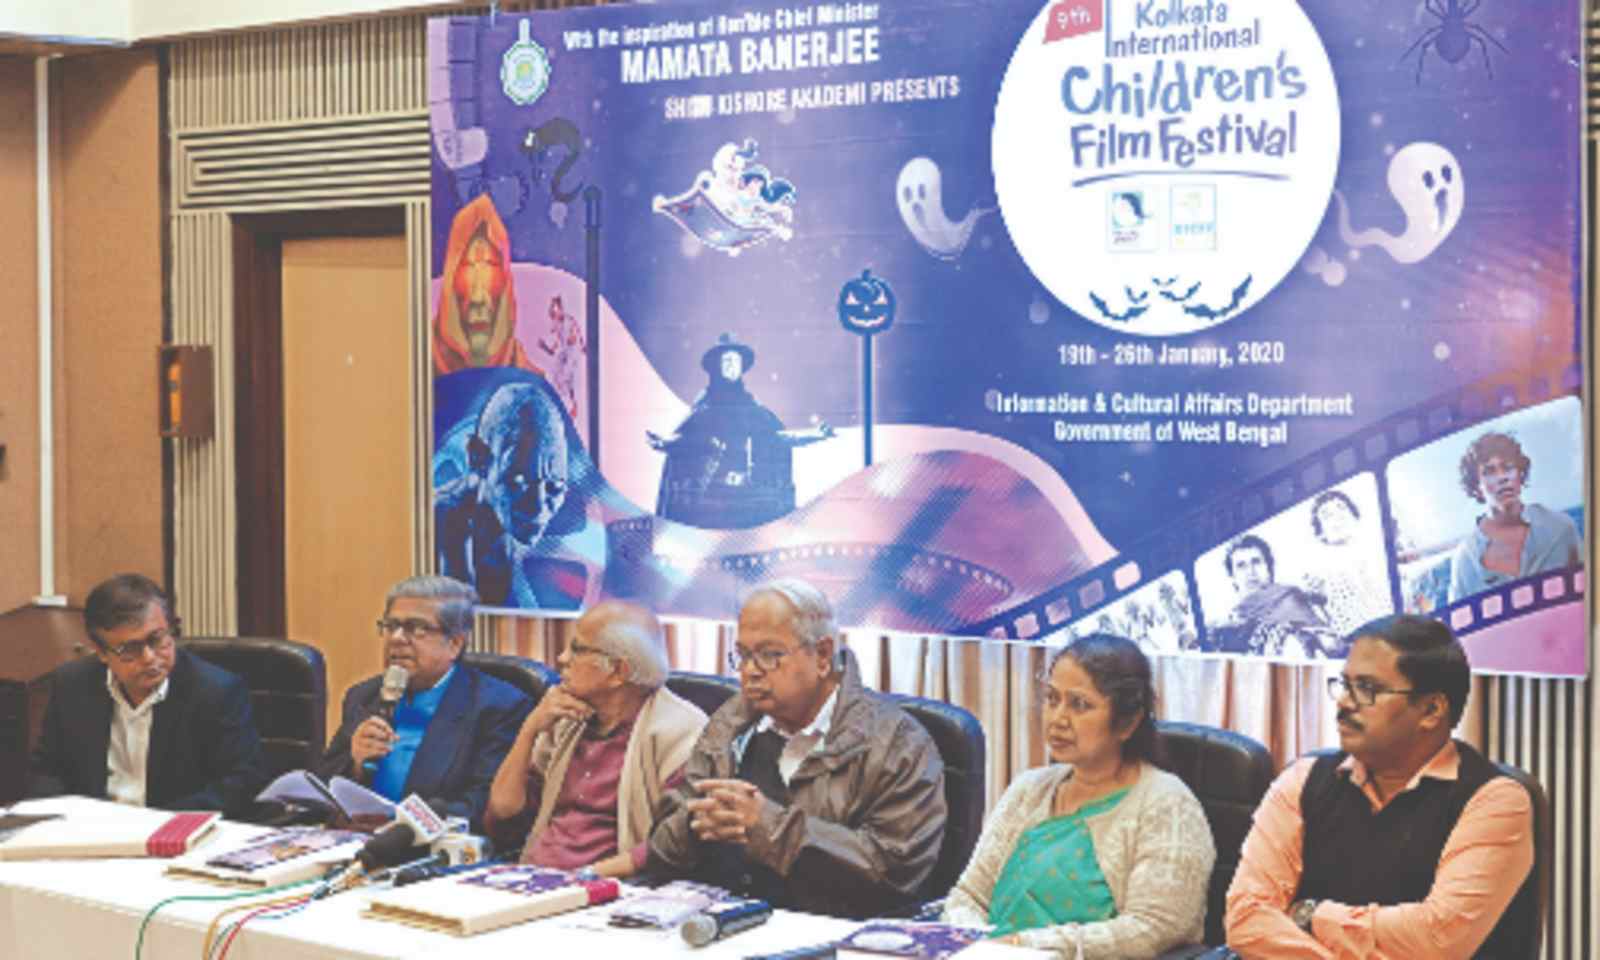 Kolkata host 9th International Children's Film Festival_40.1